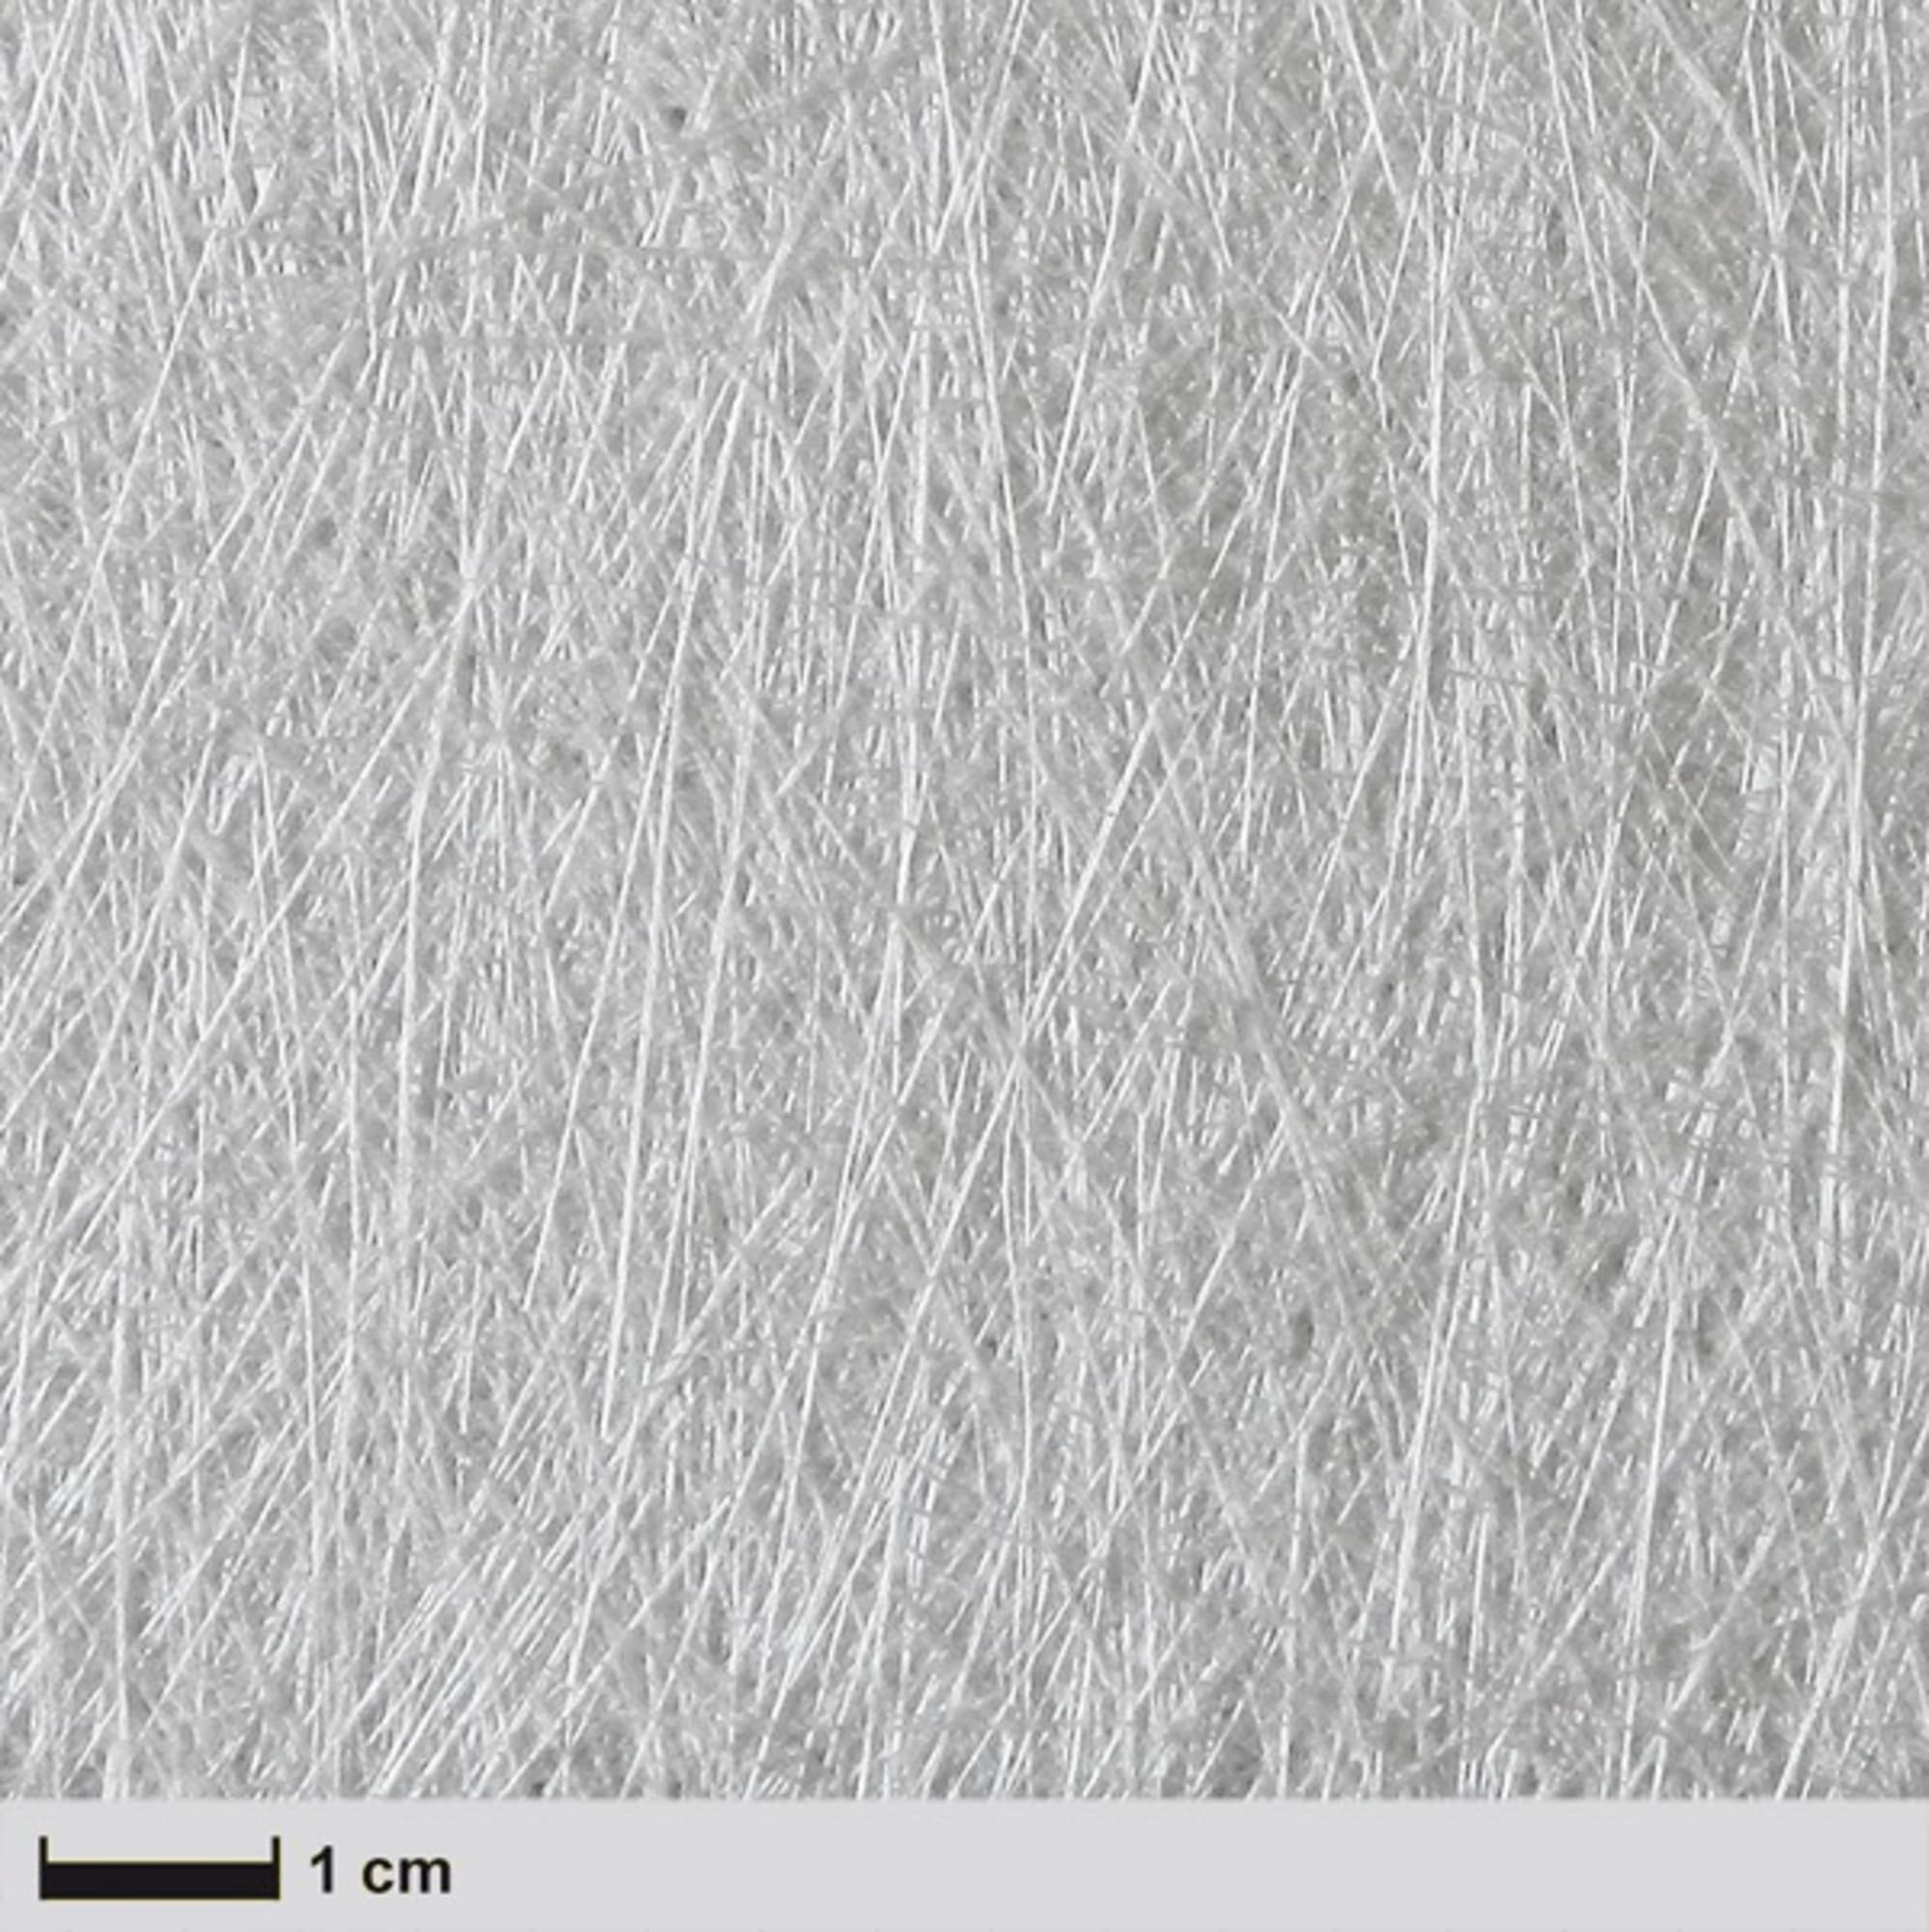 Chopped strand mat 450 g/m², 127 cm